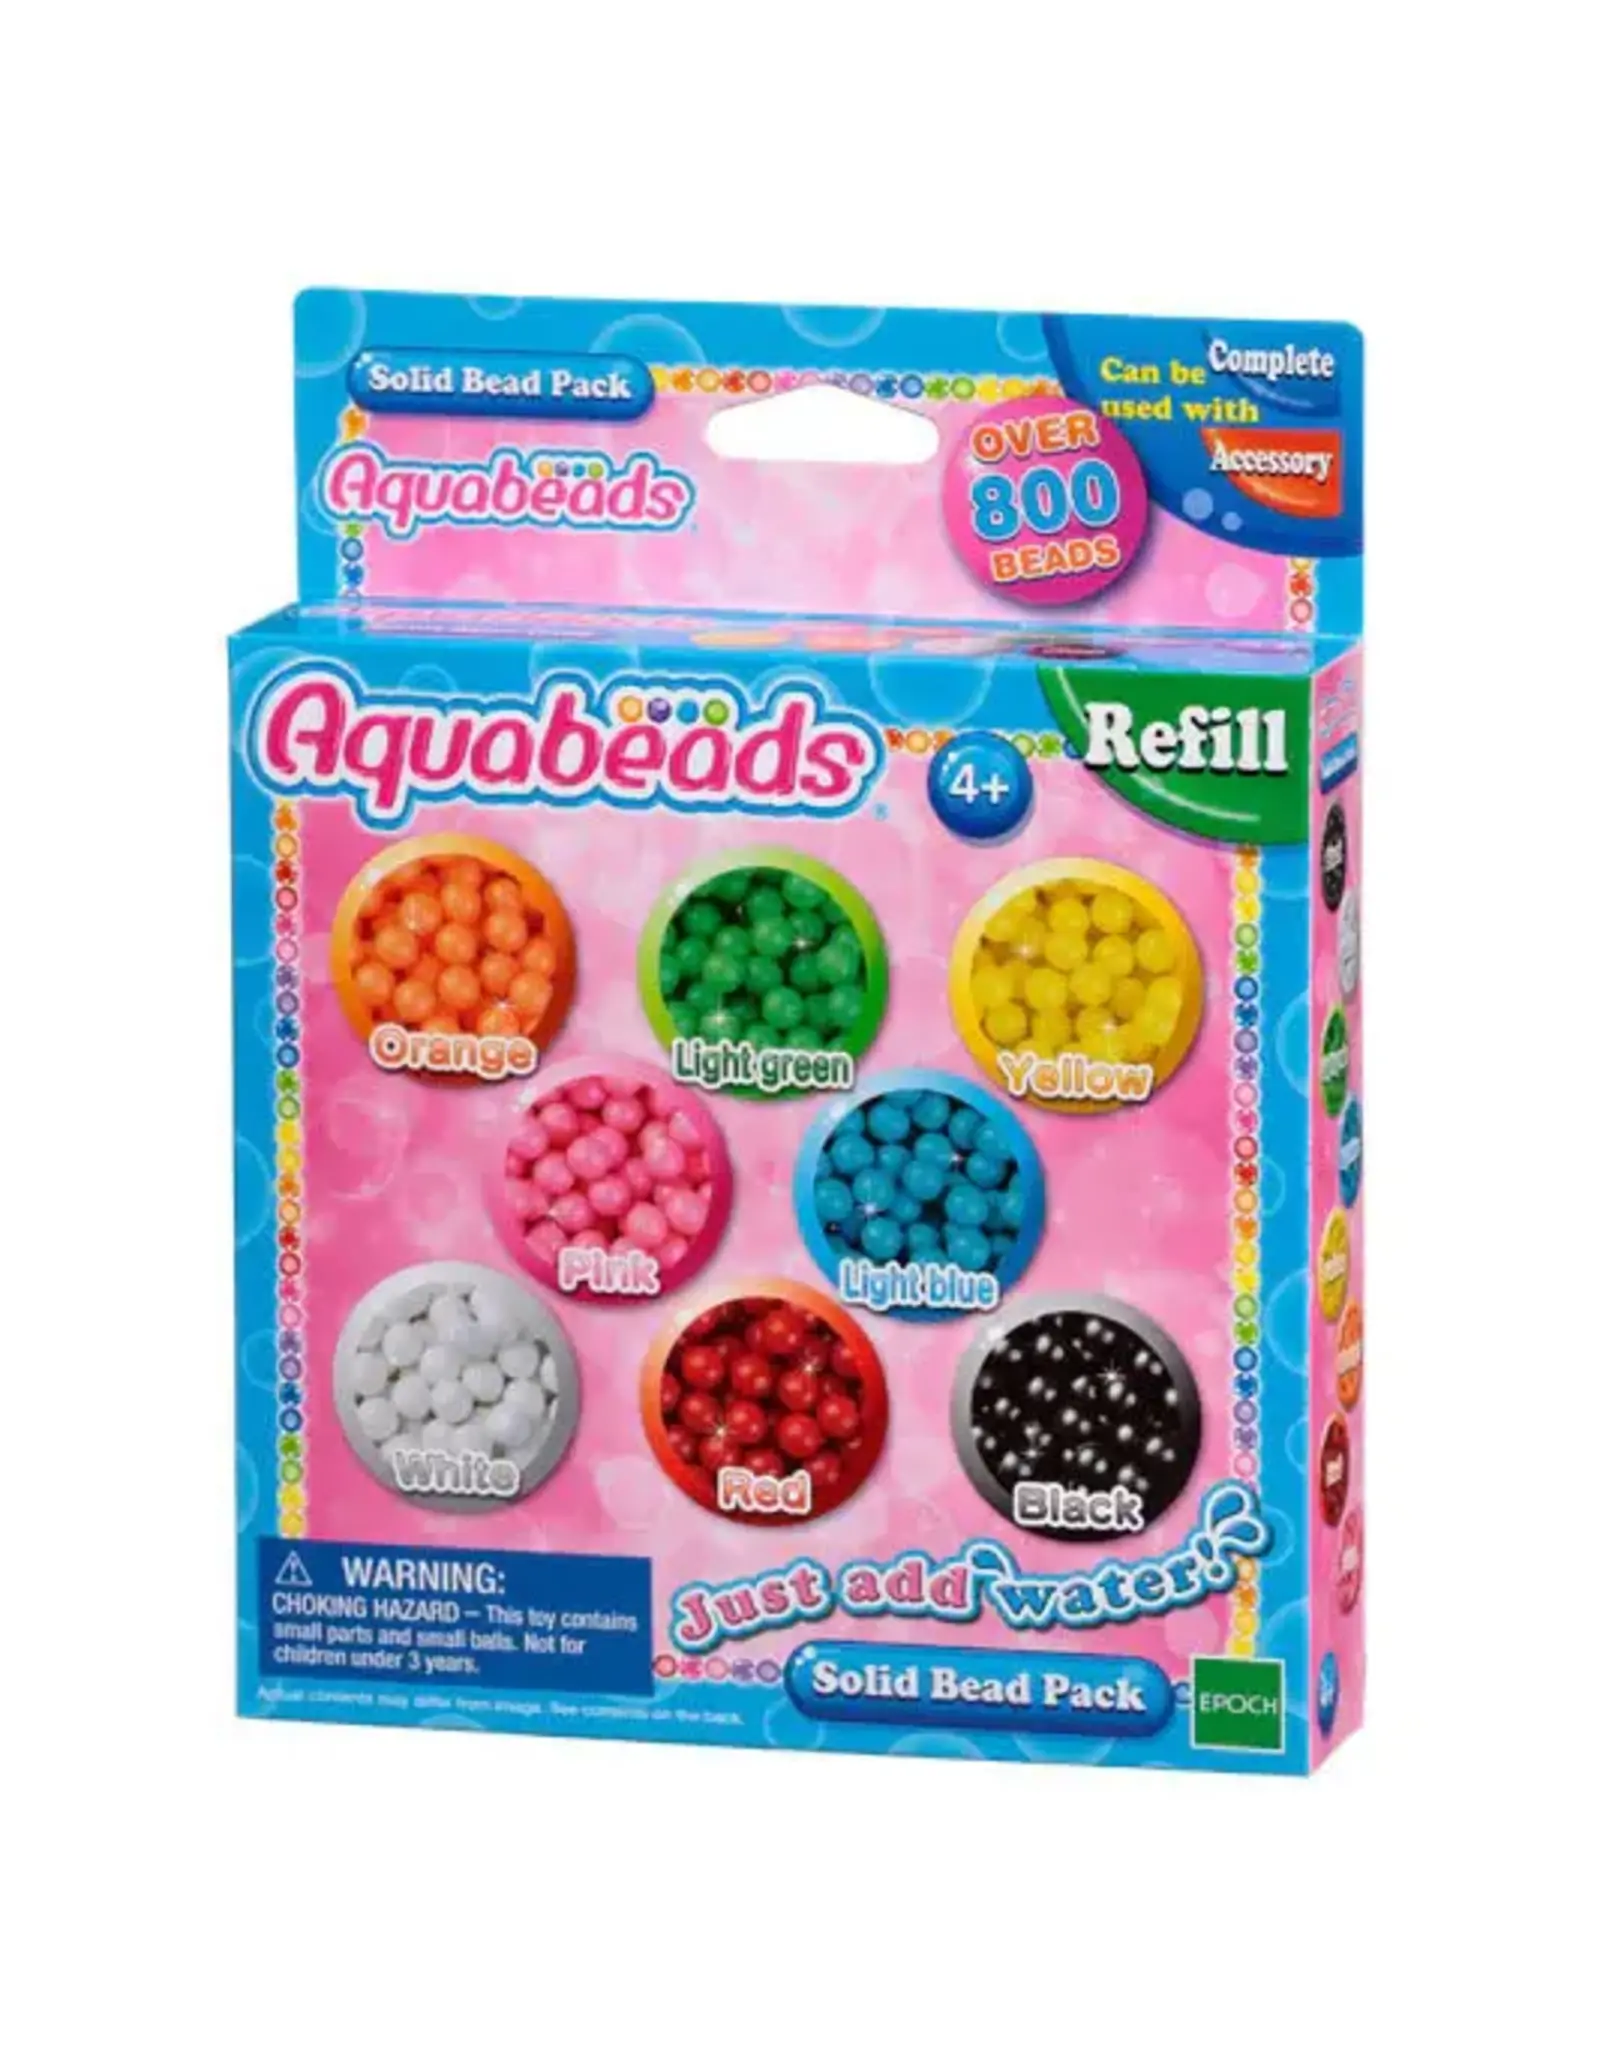 Aquabeads Aquabeads Solid Bead Pack